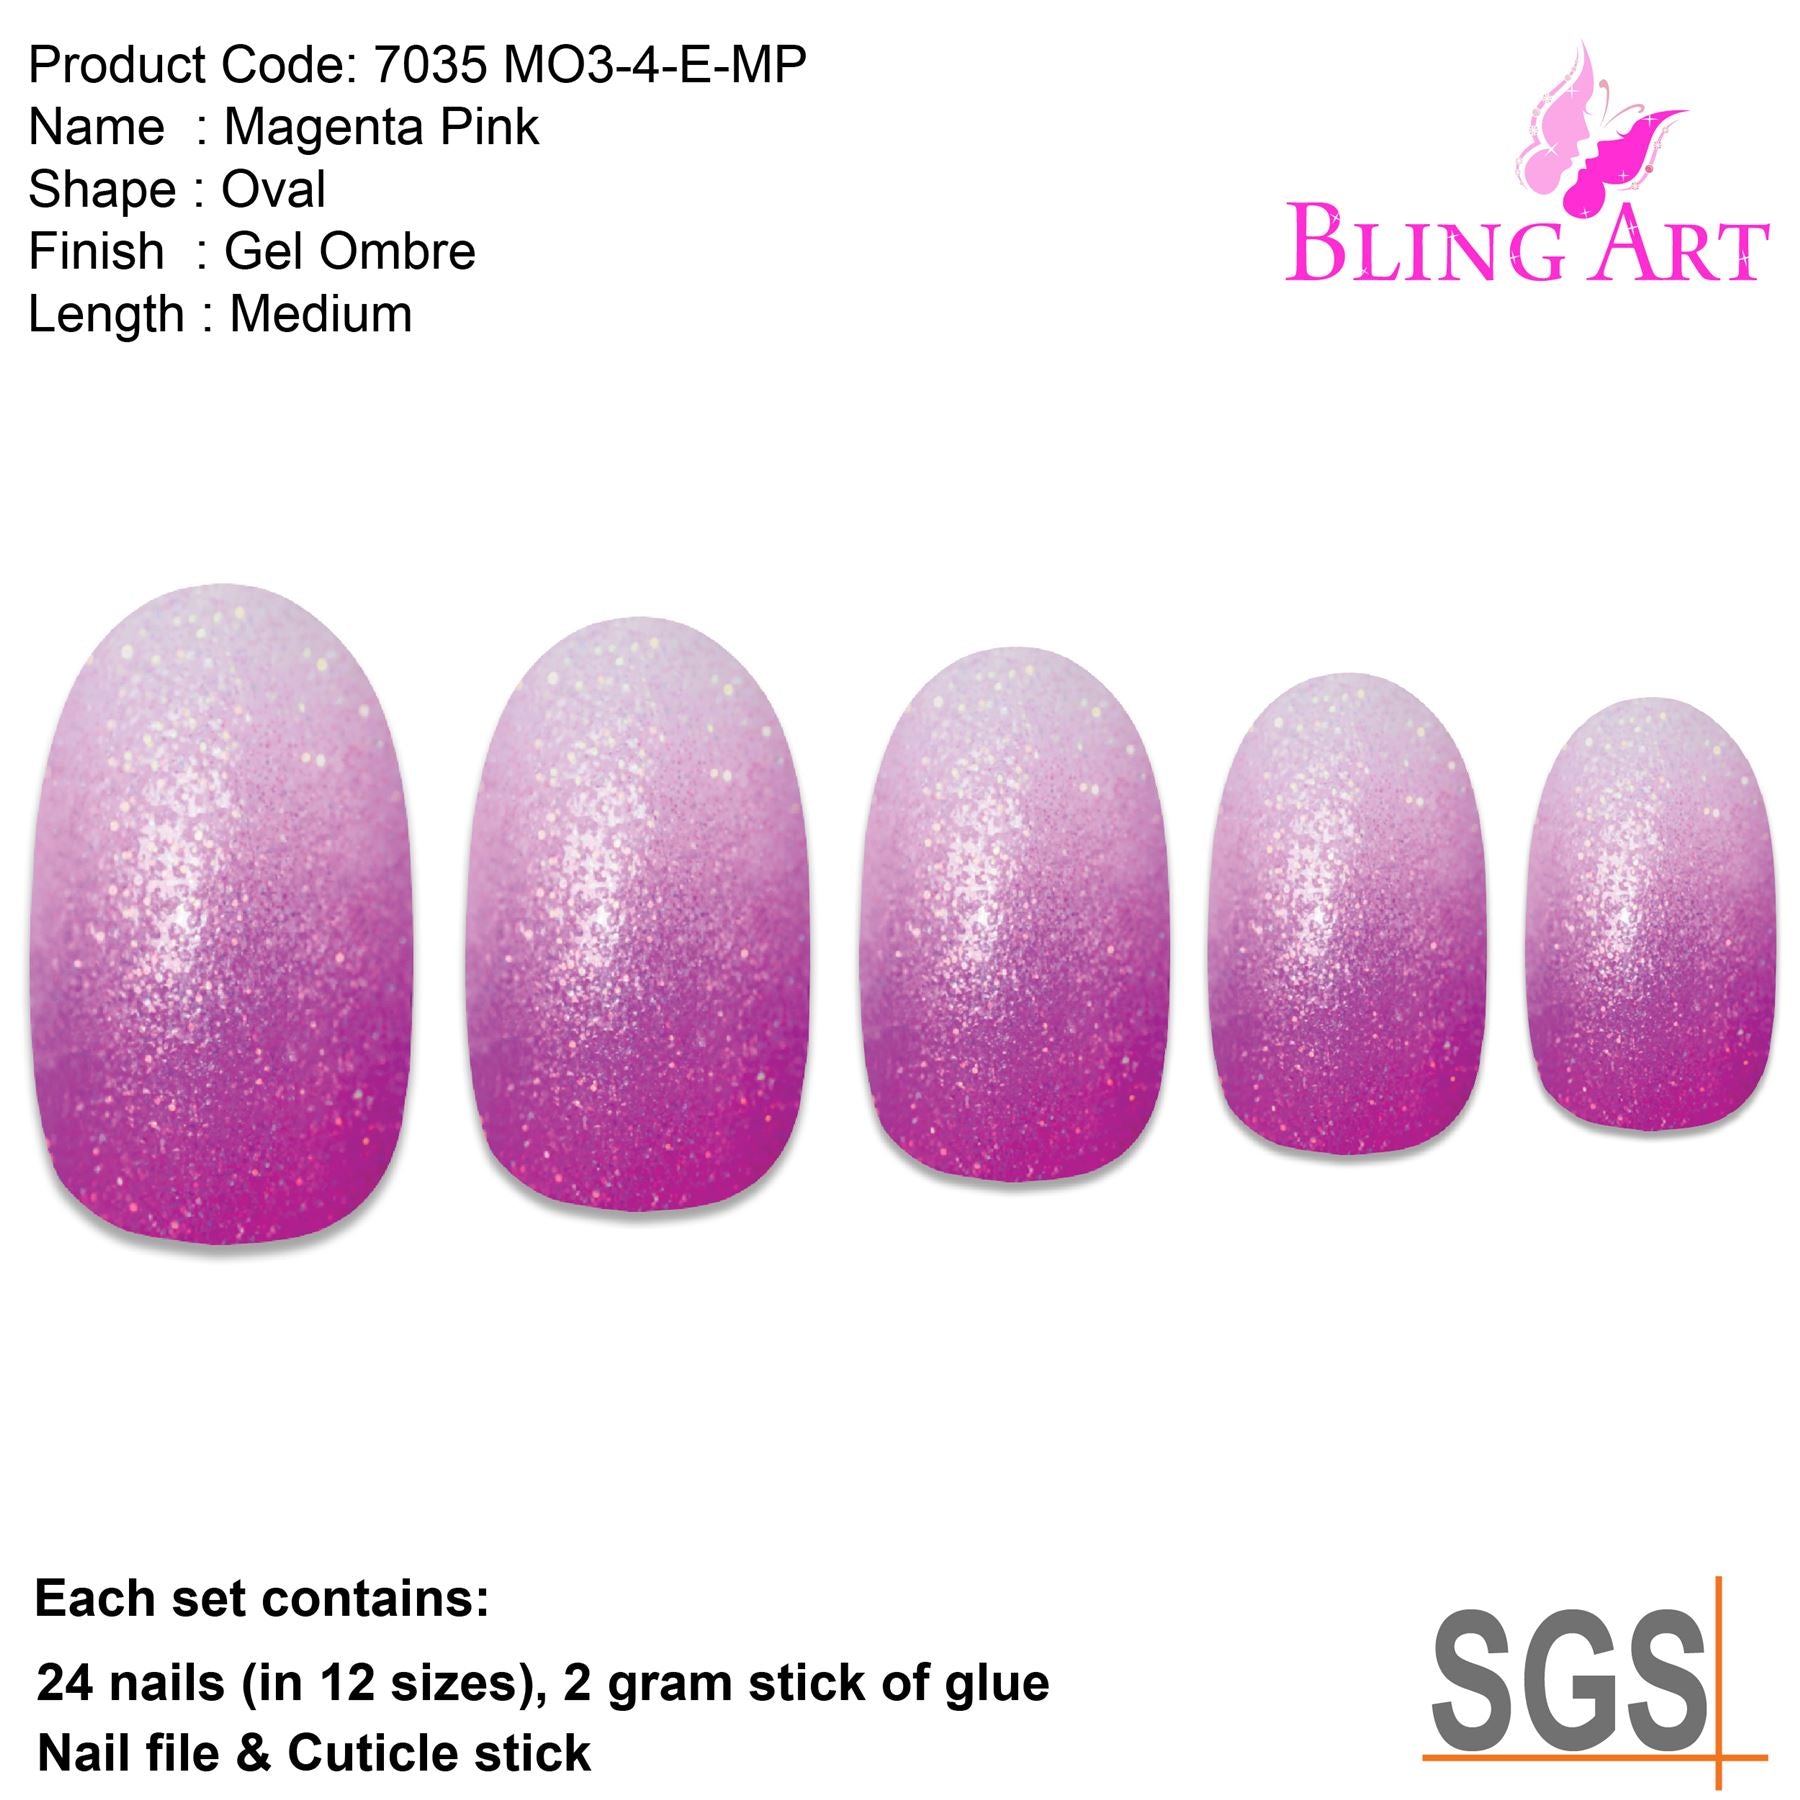 False Nails by Bling Art Magenta Gel Ombre Oval Medium Fake Acrylic 24 Tips